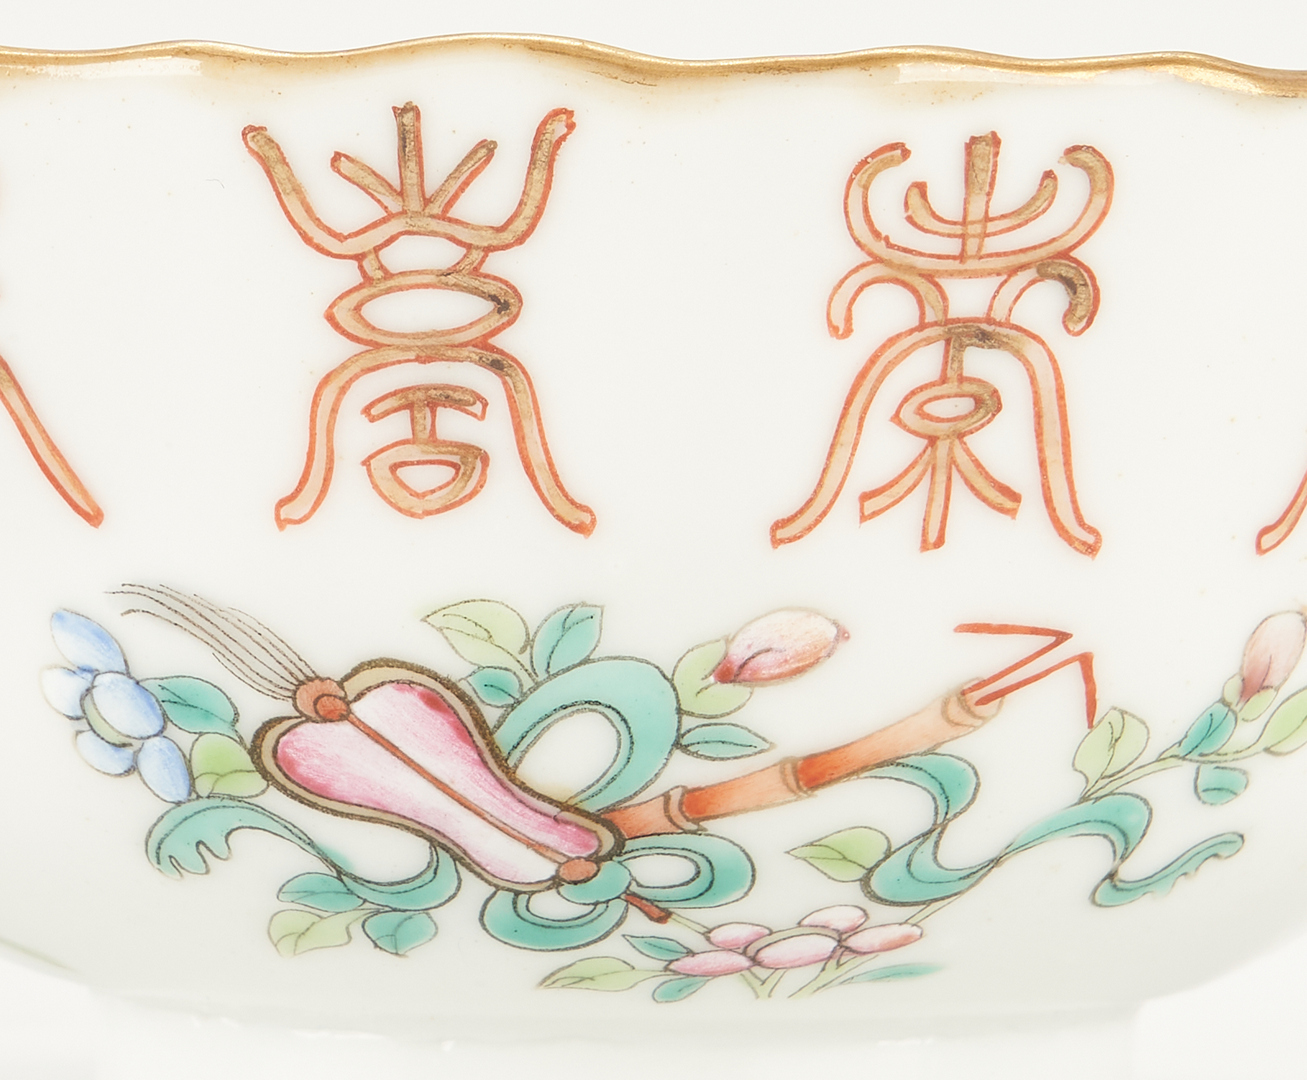 Lot 12: 3 Guangxu Famille Rose Porcelain Nesting Bowls